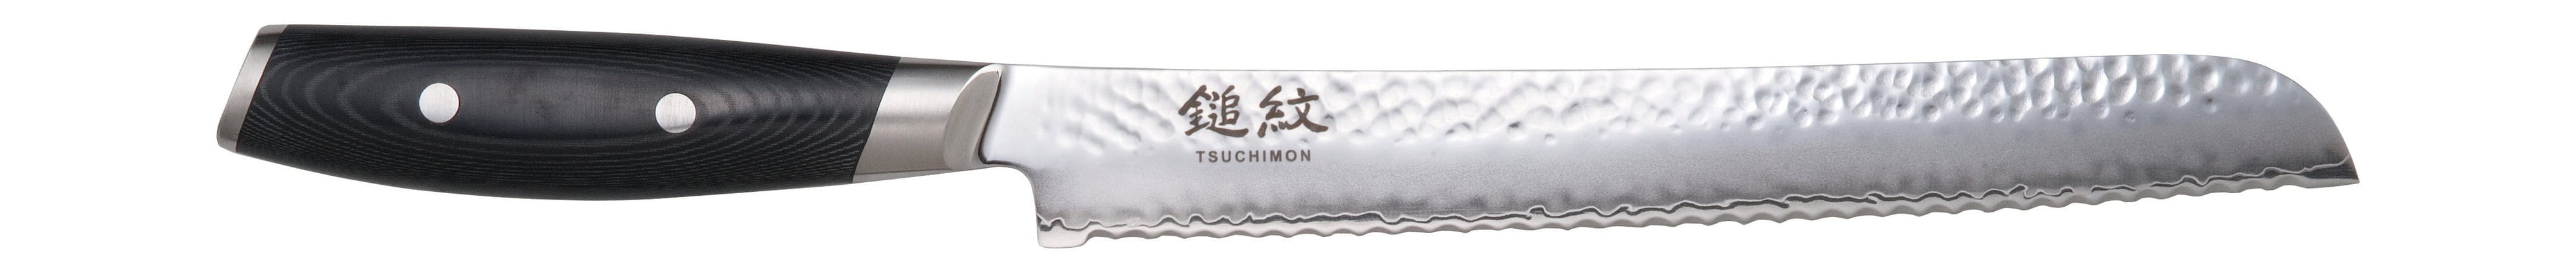 Coltello da pane yaxell tsuchimon, 23 cm